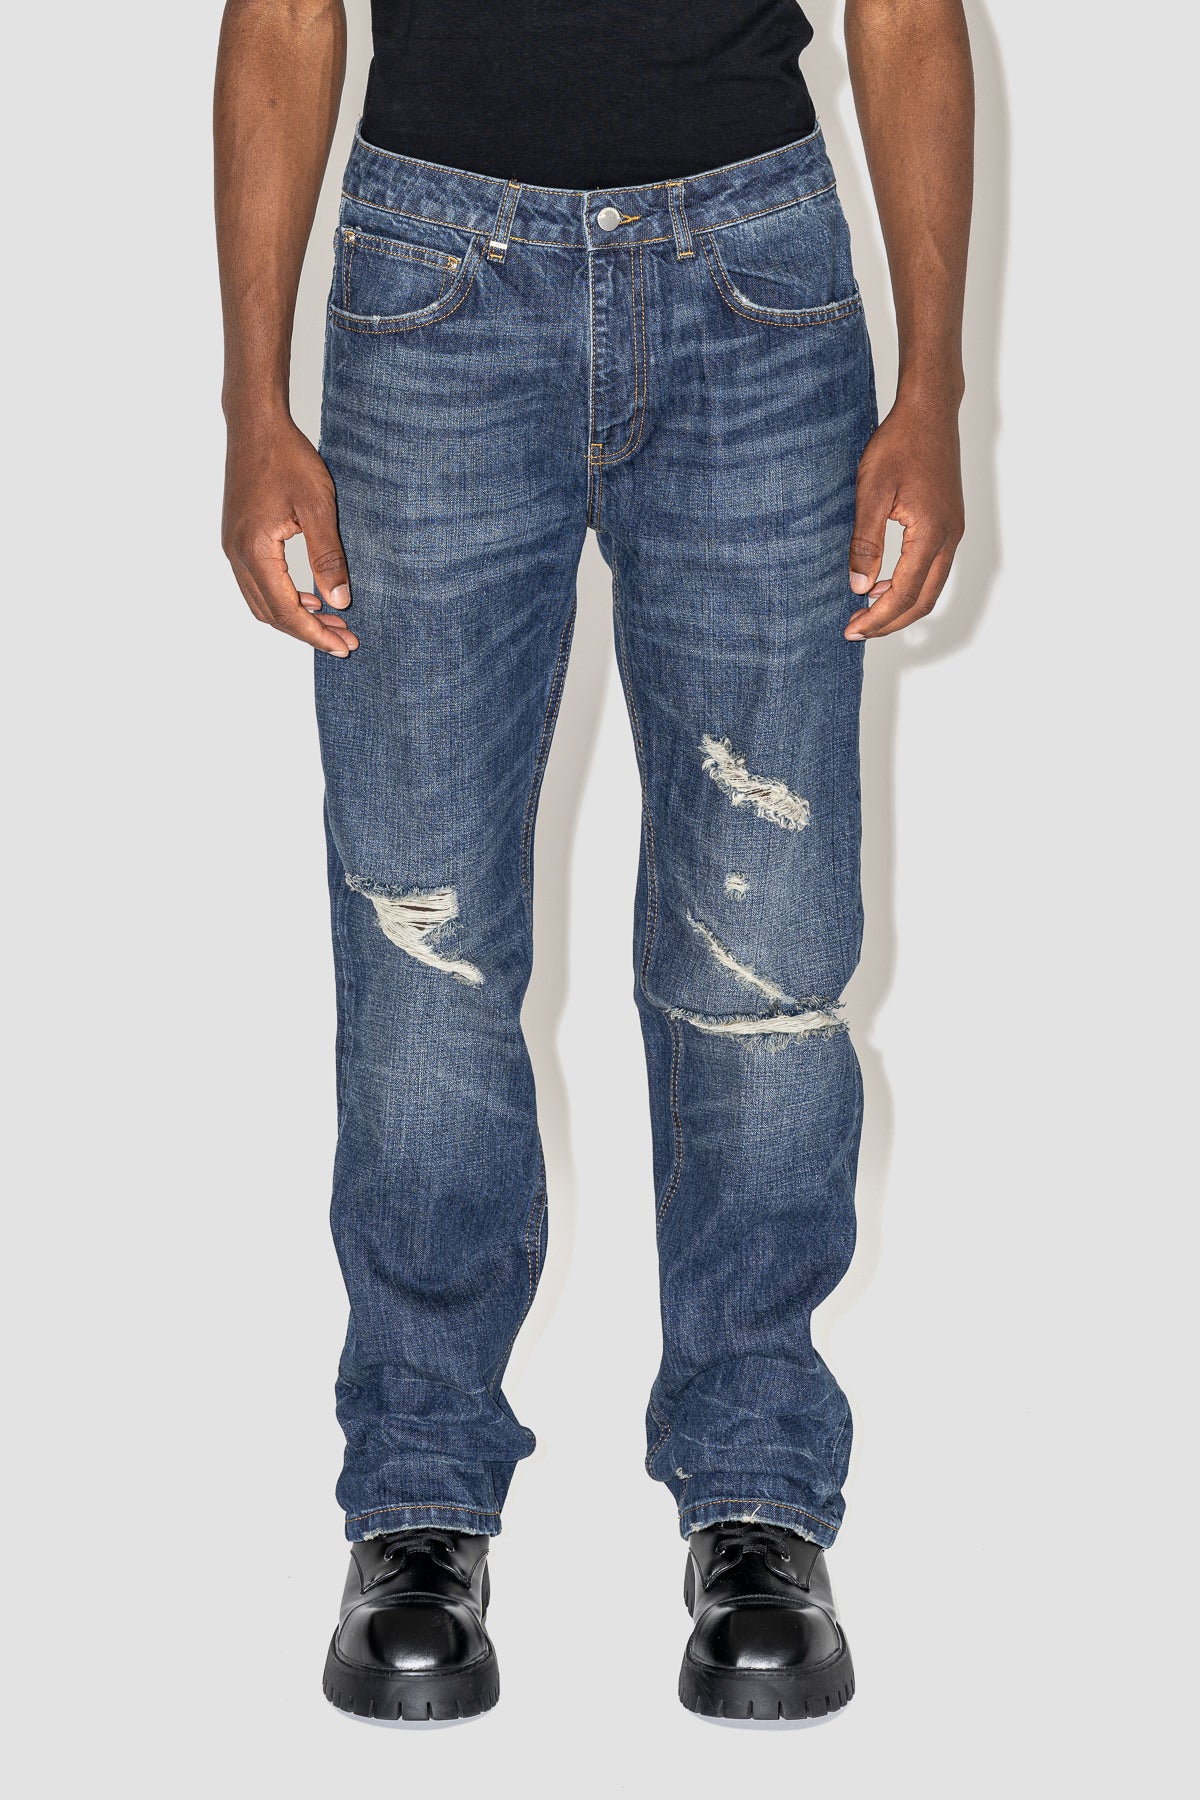 Distressed Straight Jeans in Deep Sea Denim